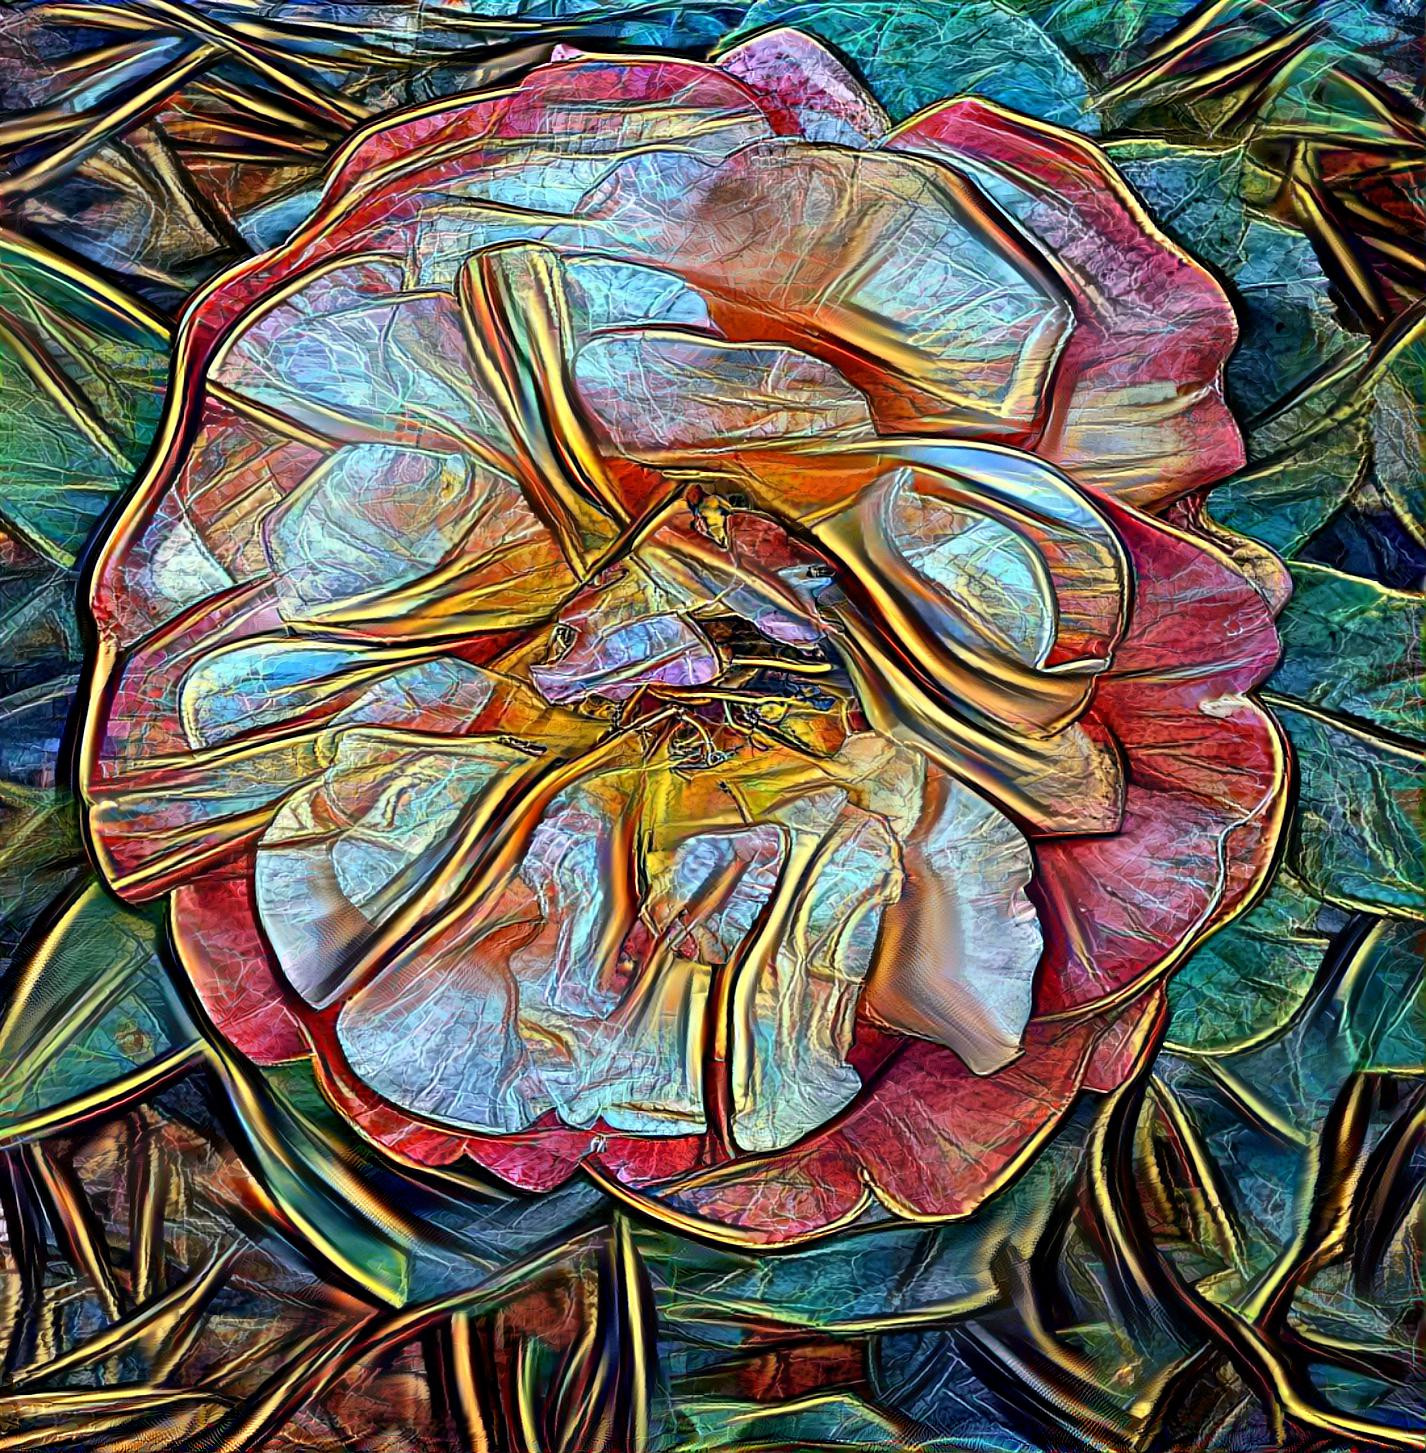 backyard rose